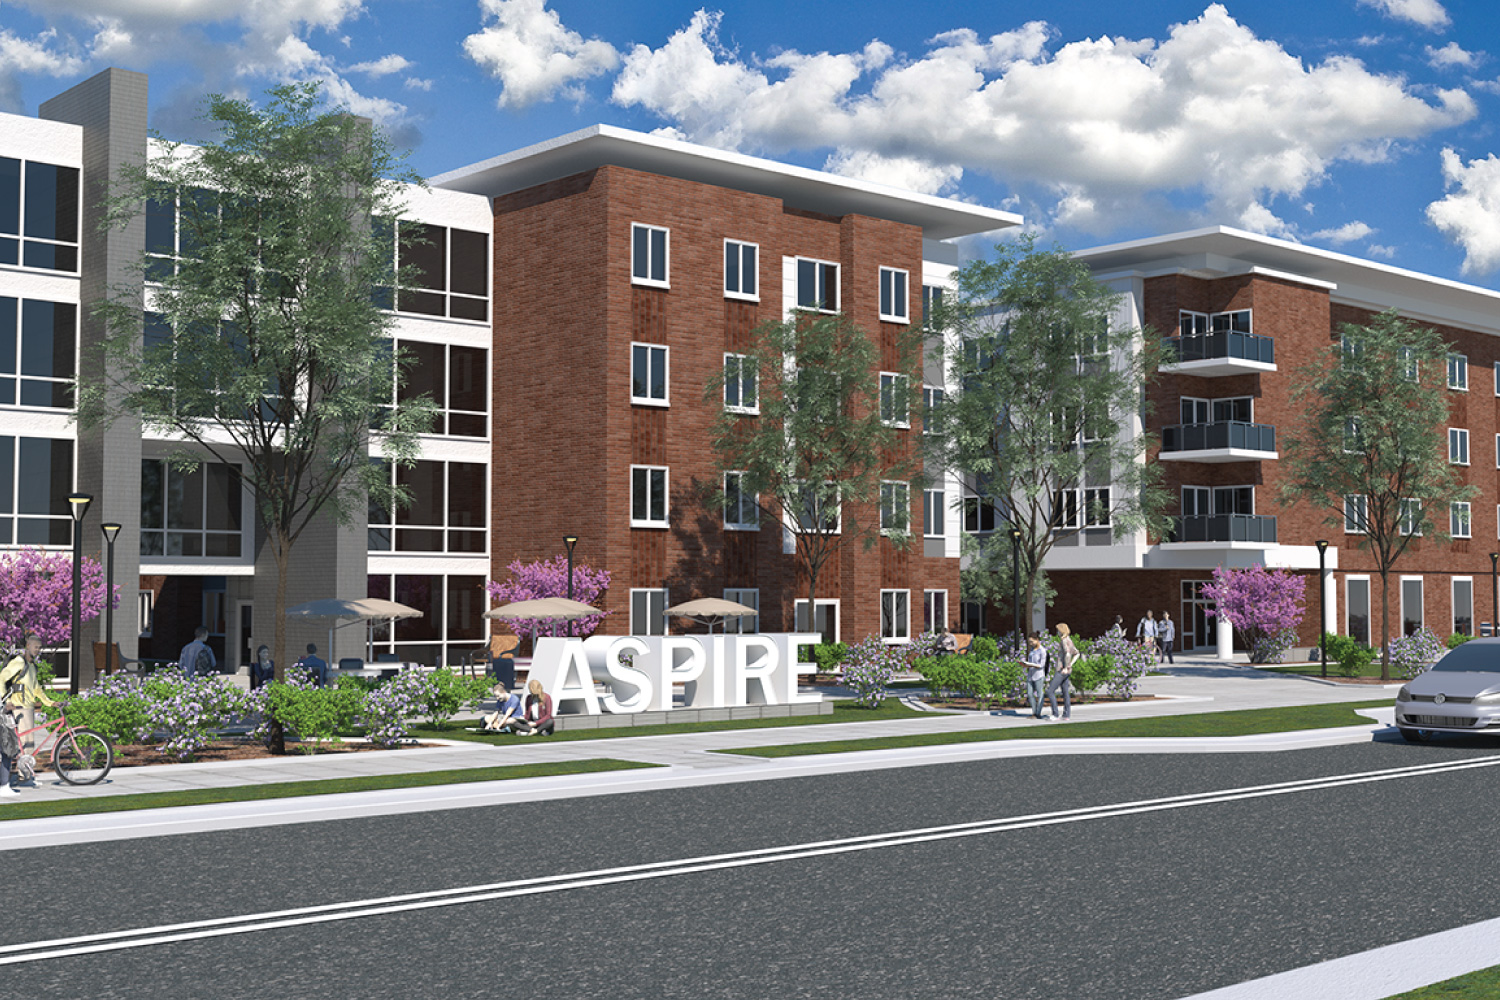 Aspire apartments incorporate 21st century digital lifestyle on Purdue campus